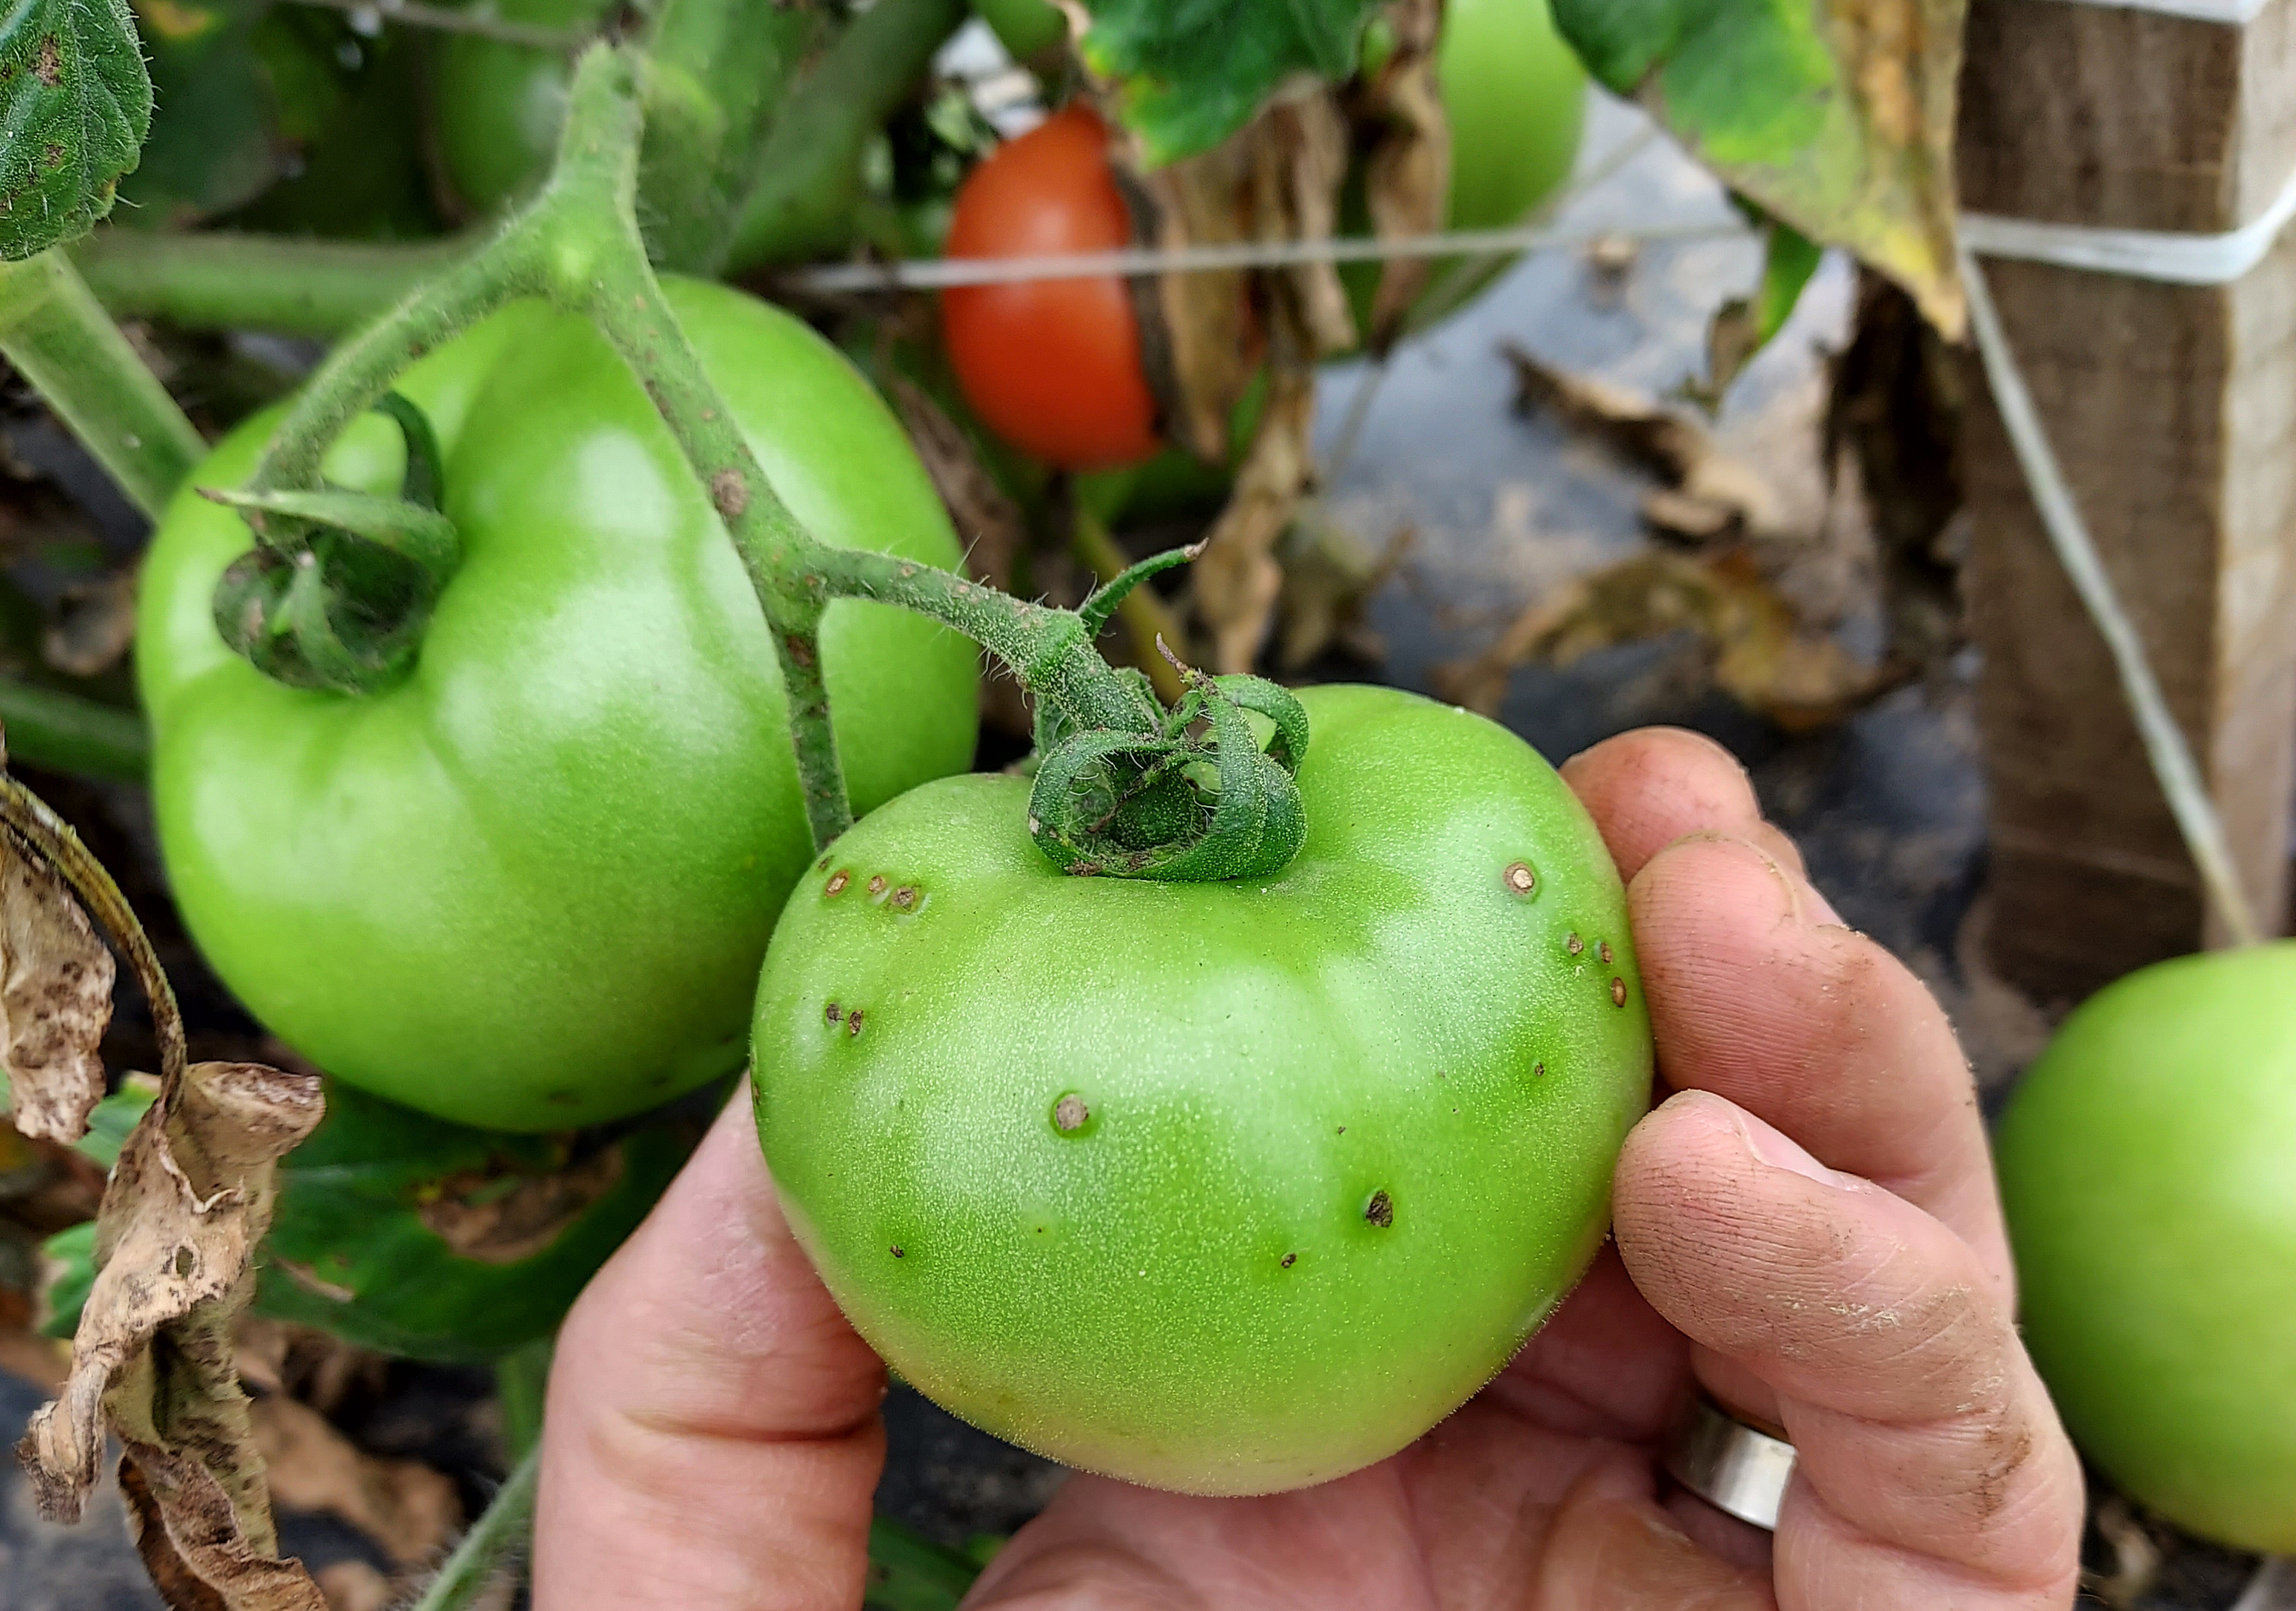 Tomato plants with fruit spotting